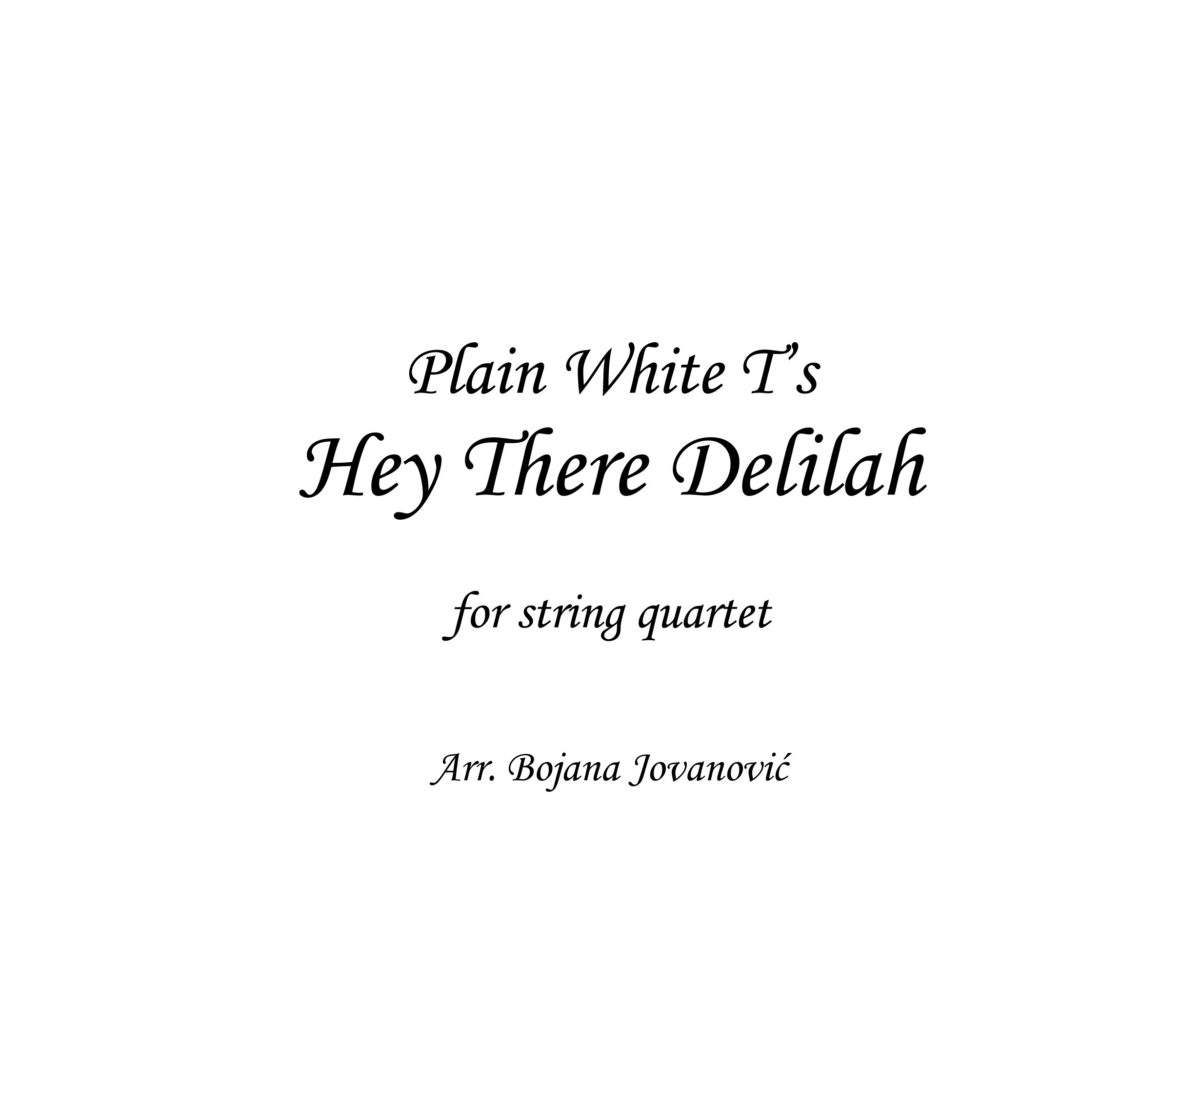 Hey There Delilah (Plain White T's) - Sheet Music